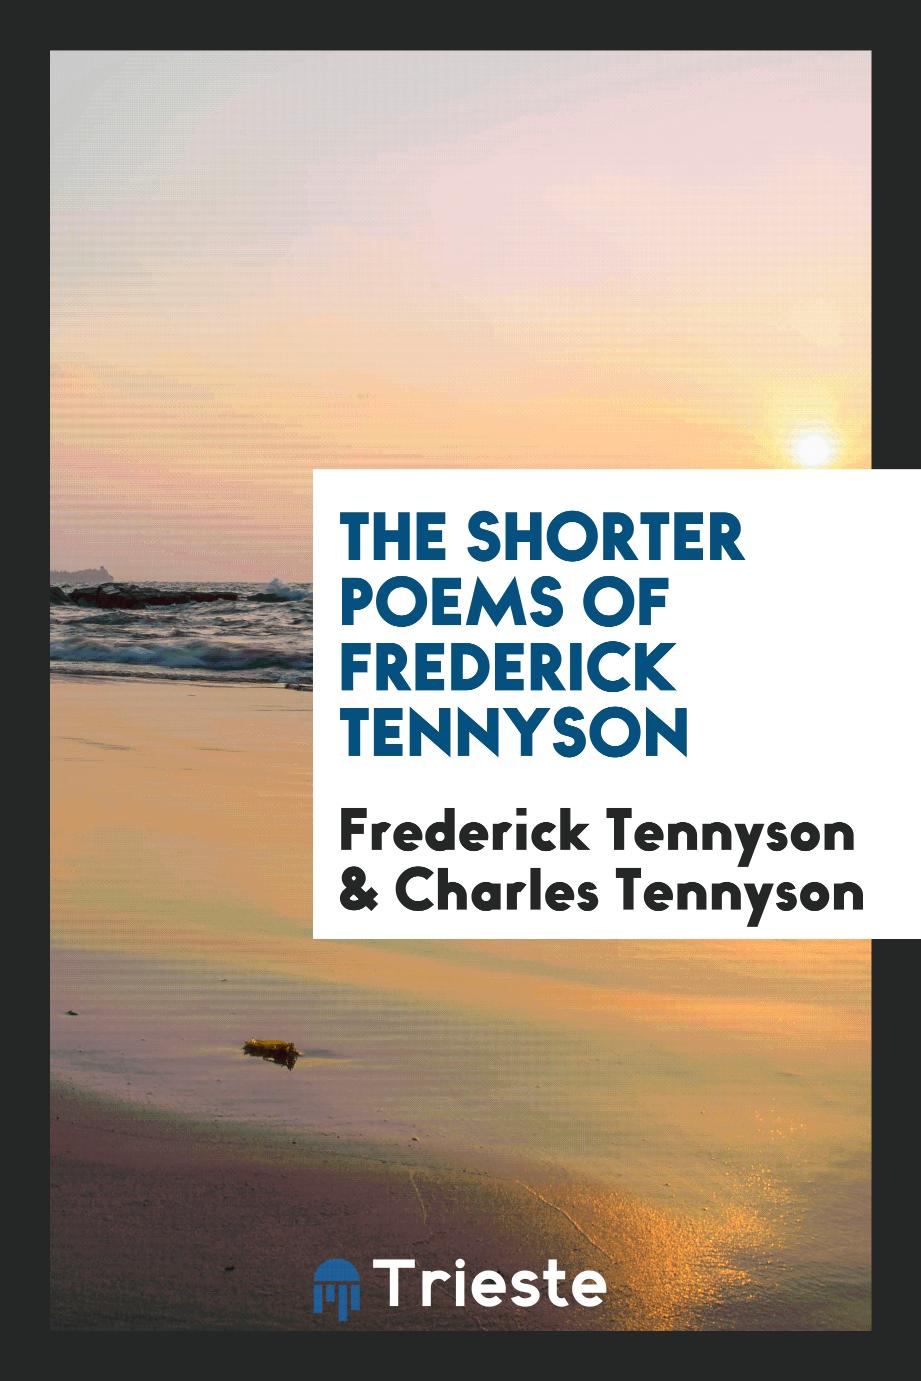 The shorter poems of Frederick Tennyson